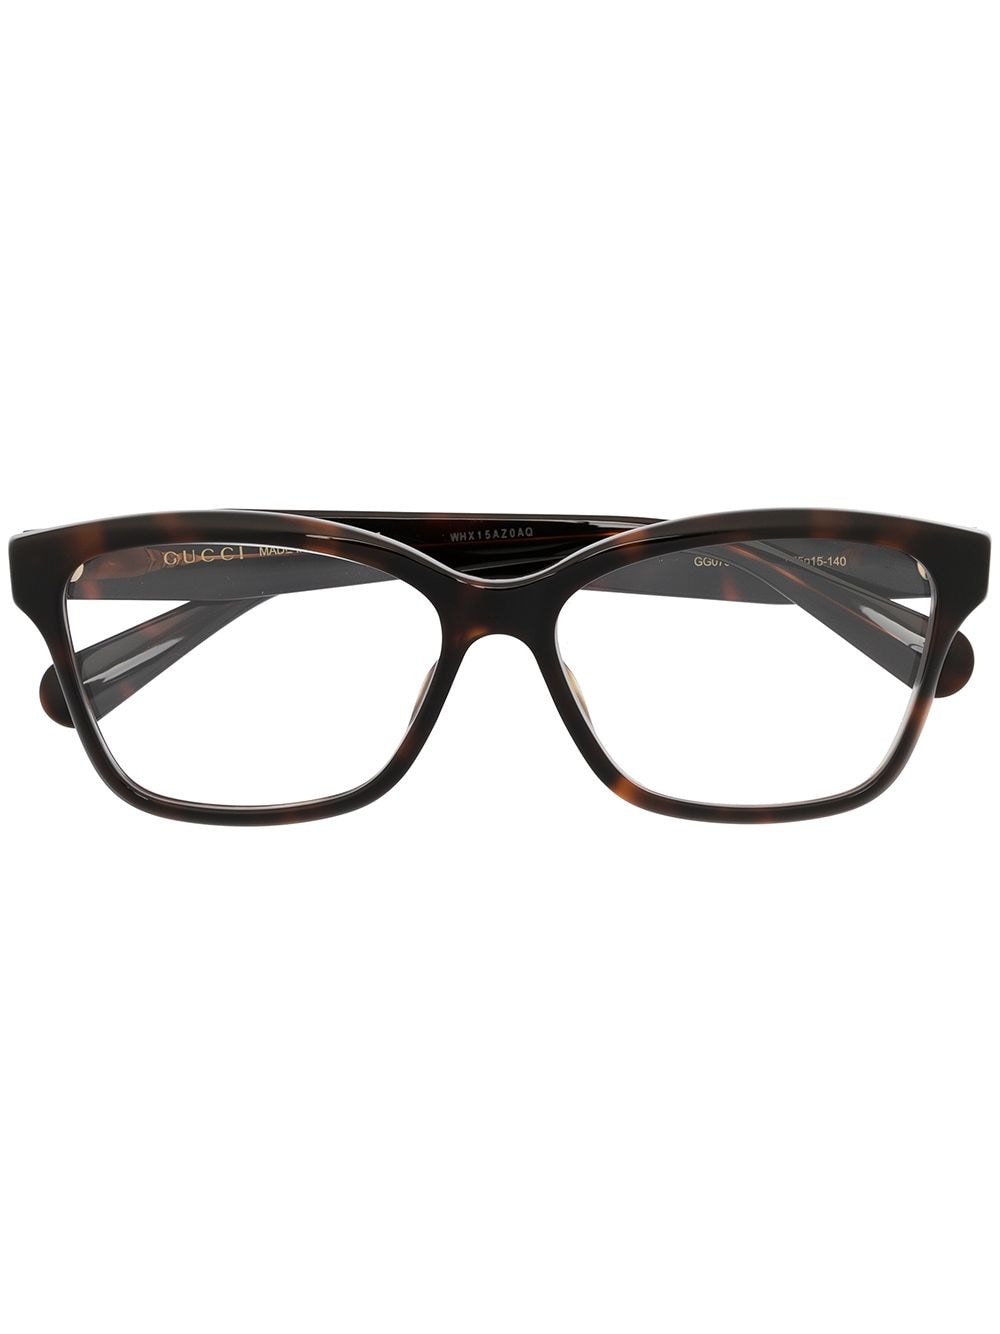 Gucci Tortoiseshell Square-frame Glasses In Brown